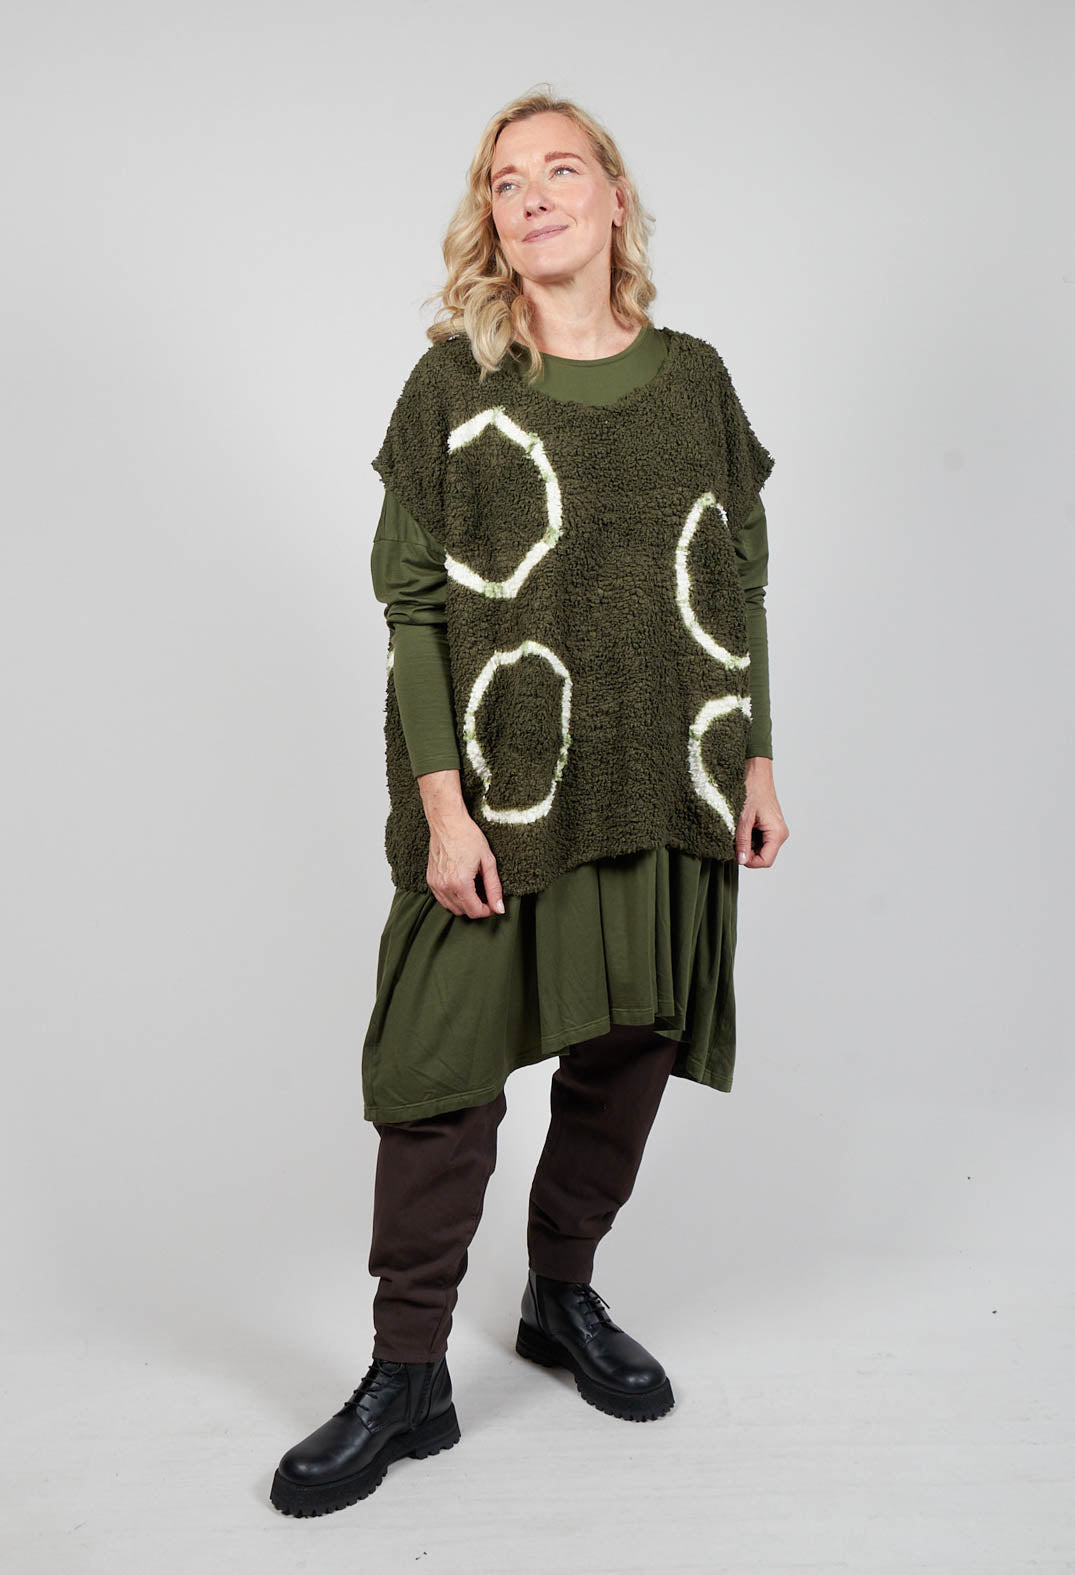 Nerdreich Smock Dress in Avocado Green